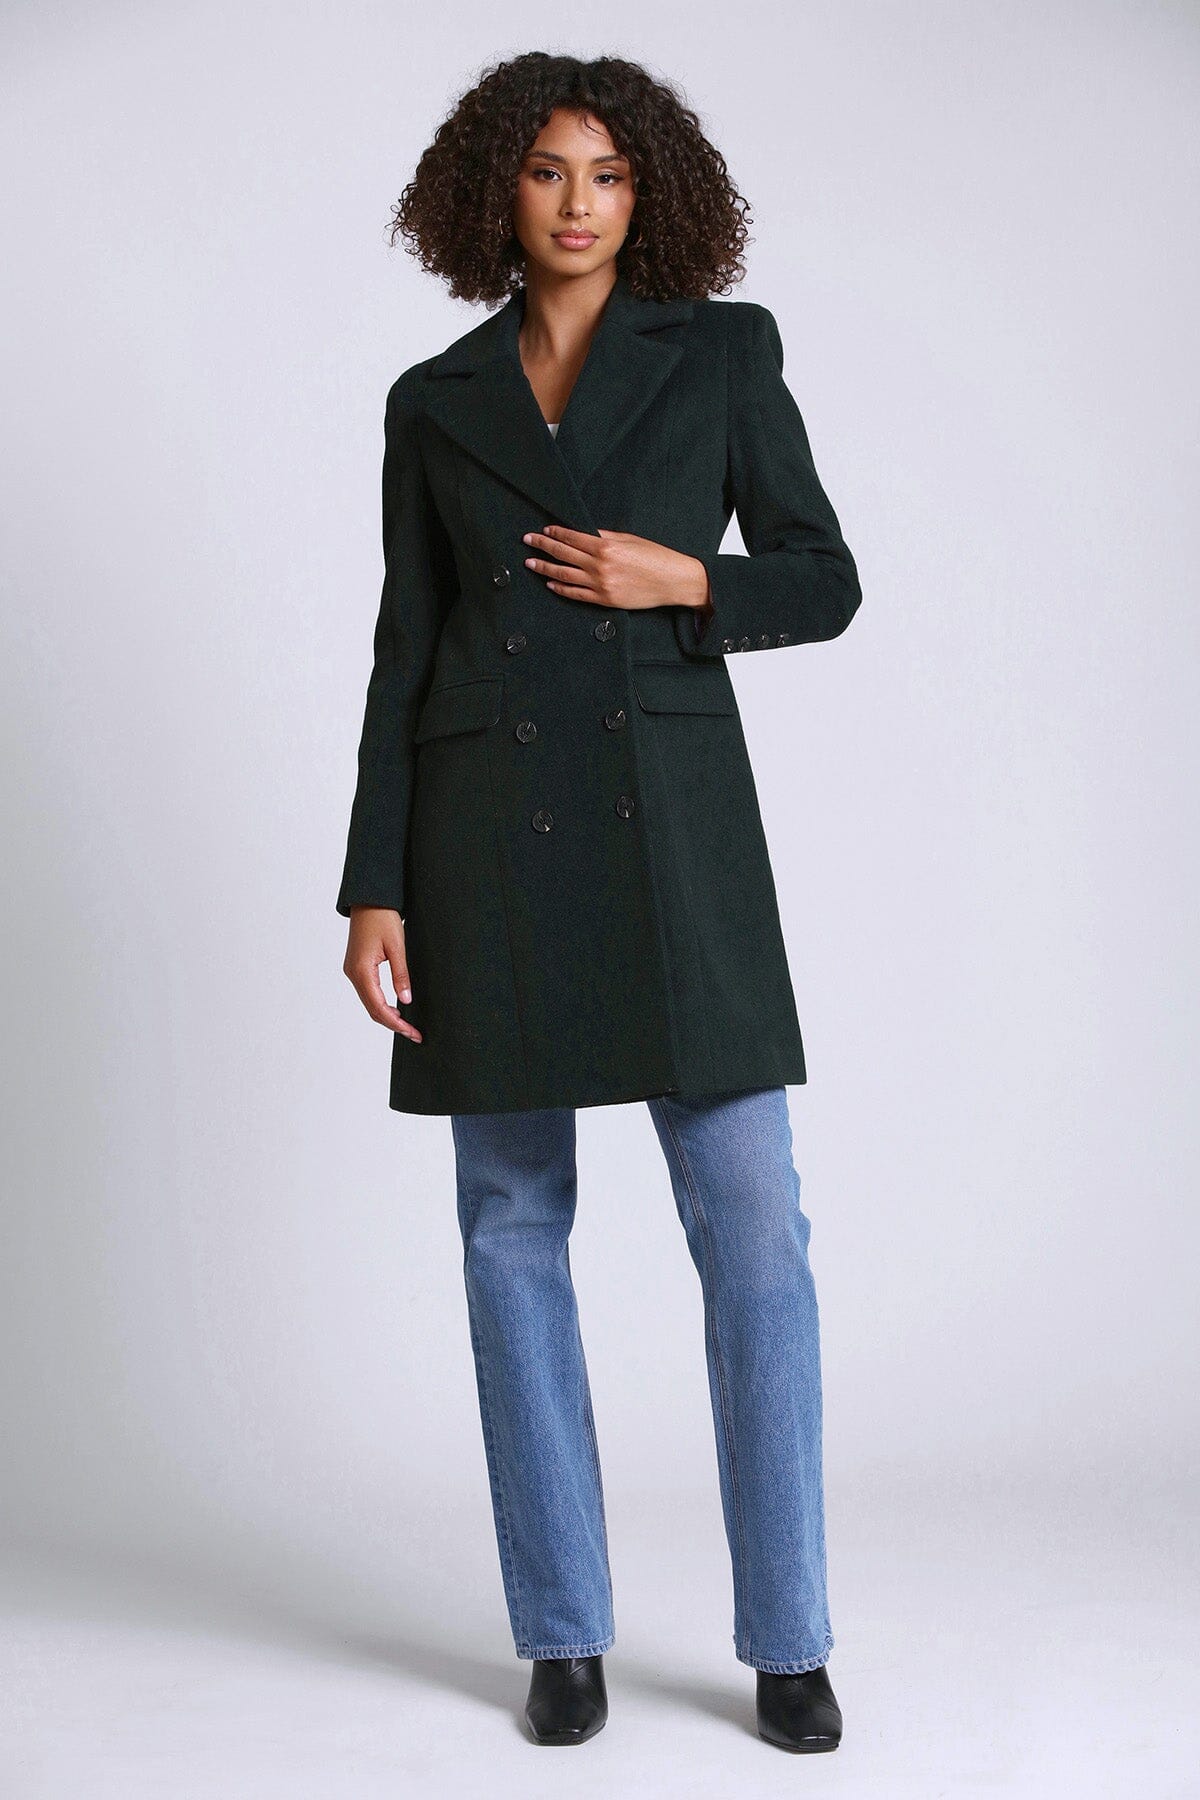 pine green wool blend double breasted coat jacket - figure flattering work appropriate outerwear for women